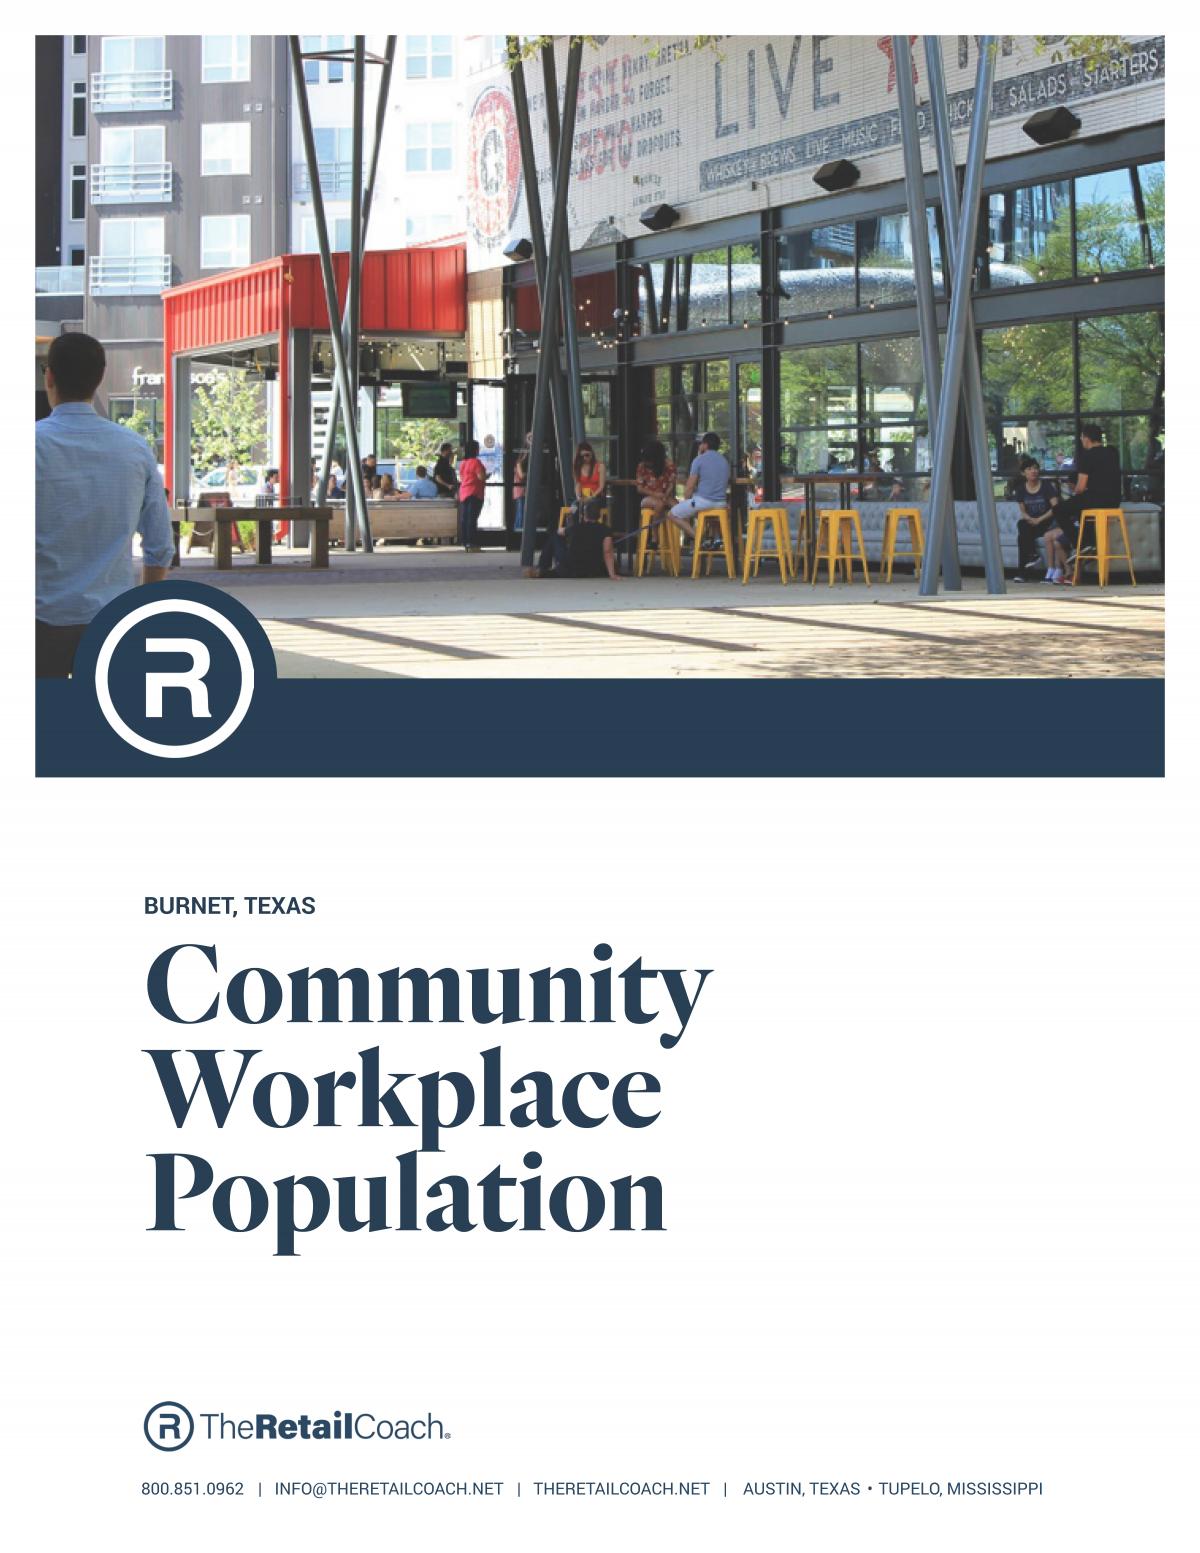 Burnet, Texas- Community Workplace Population